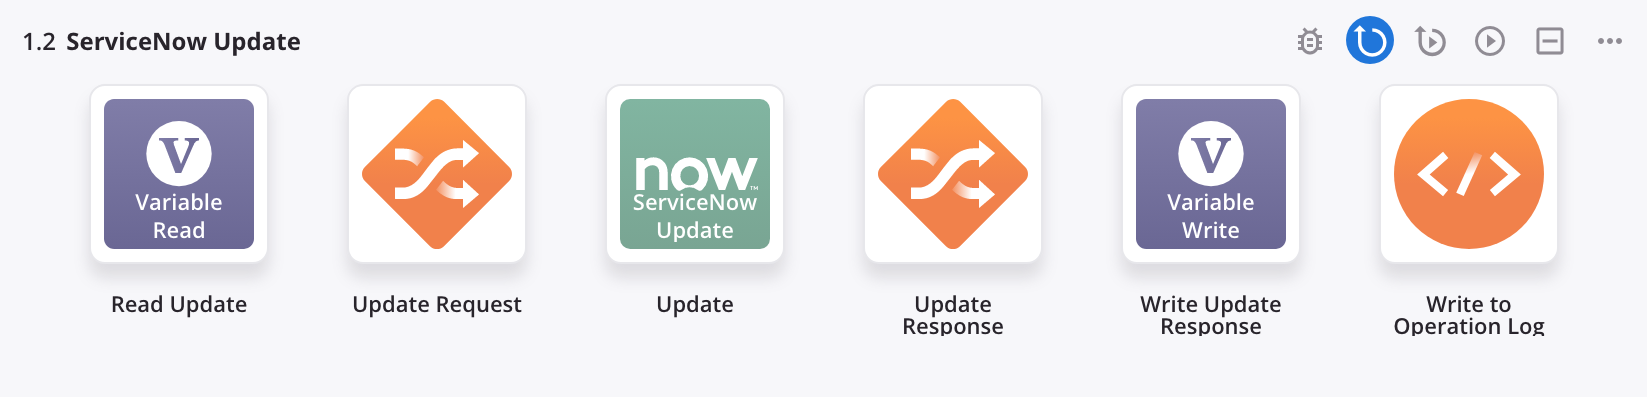 ServiceNow Update operation